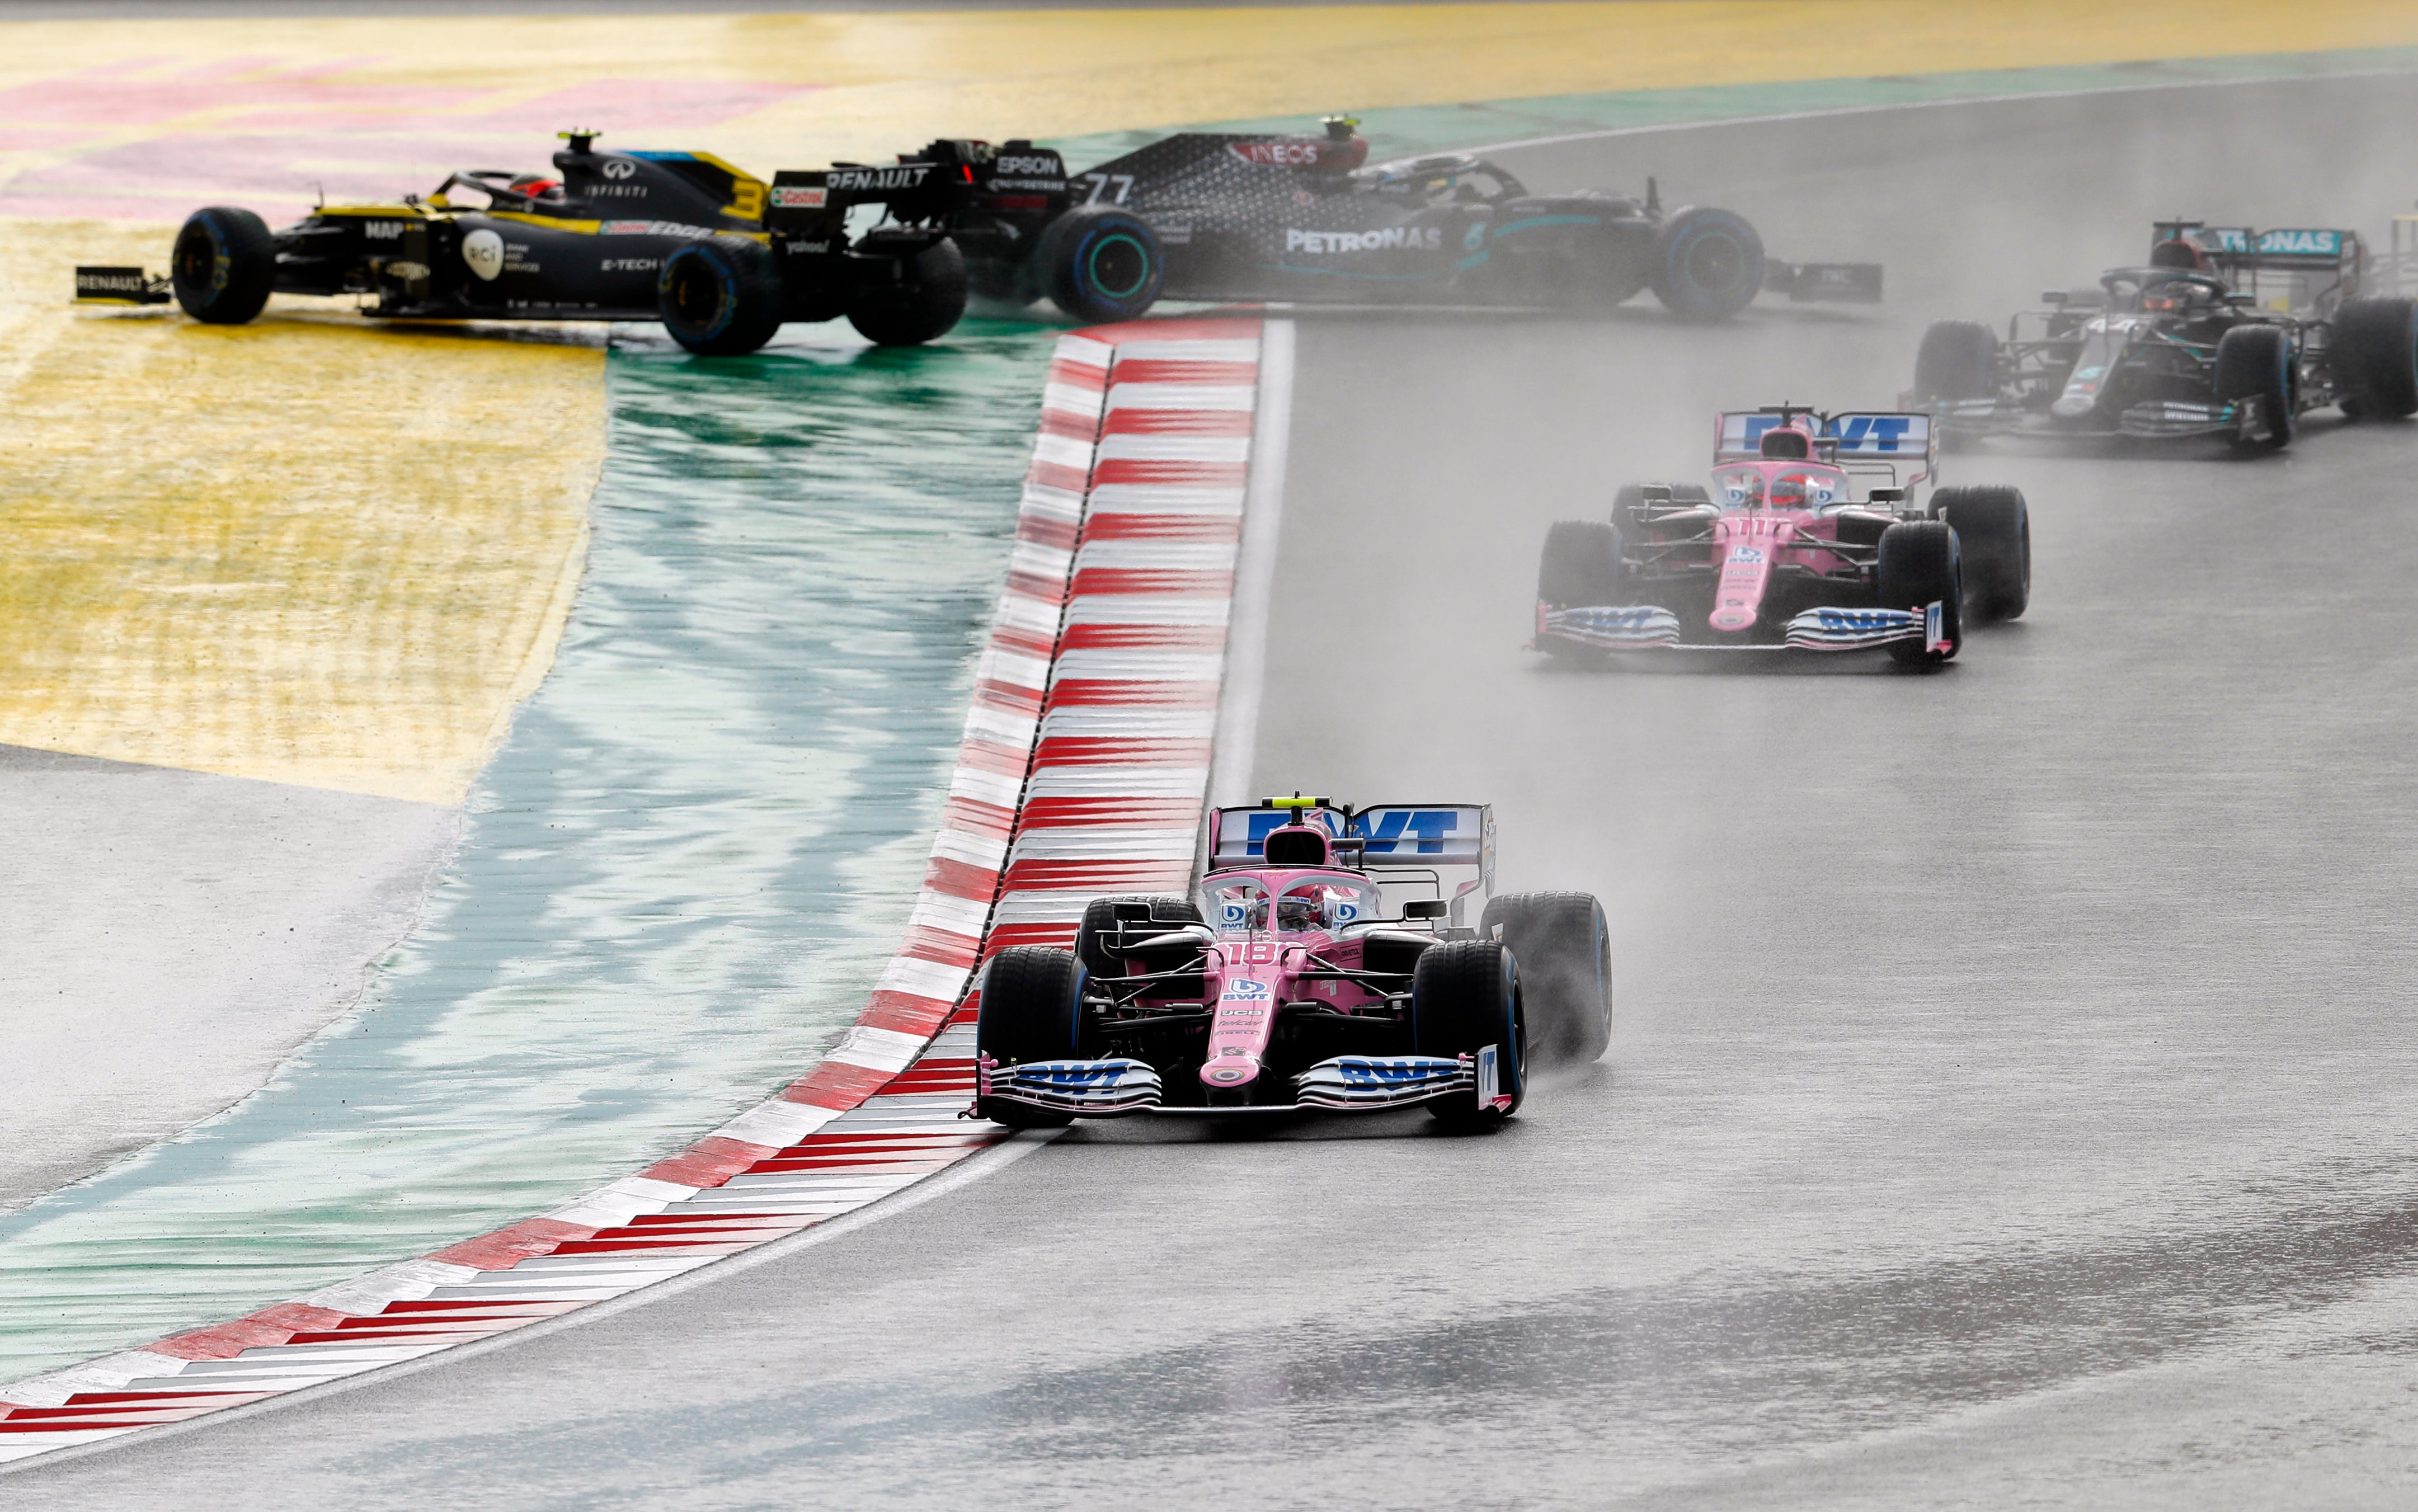 Hamilton’s championship rival spun four times during the race